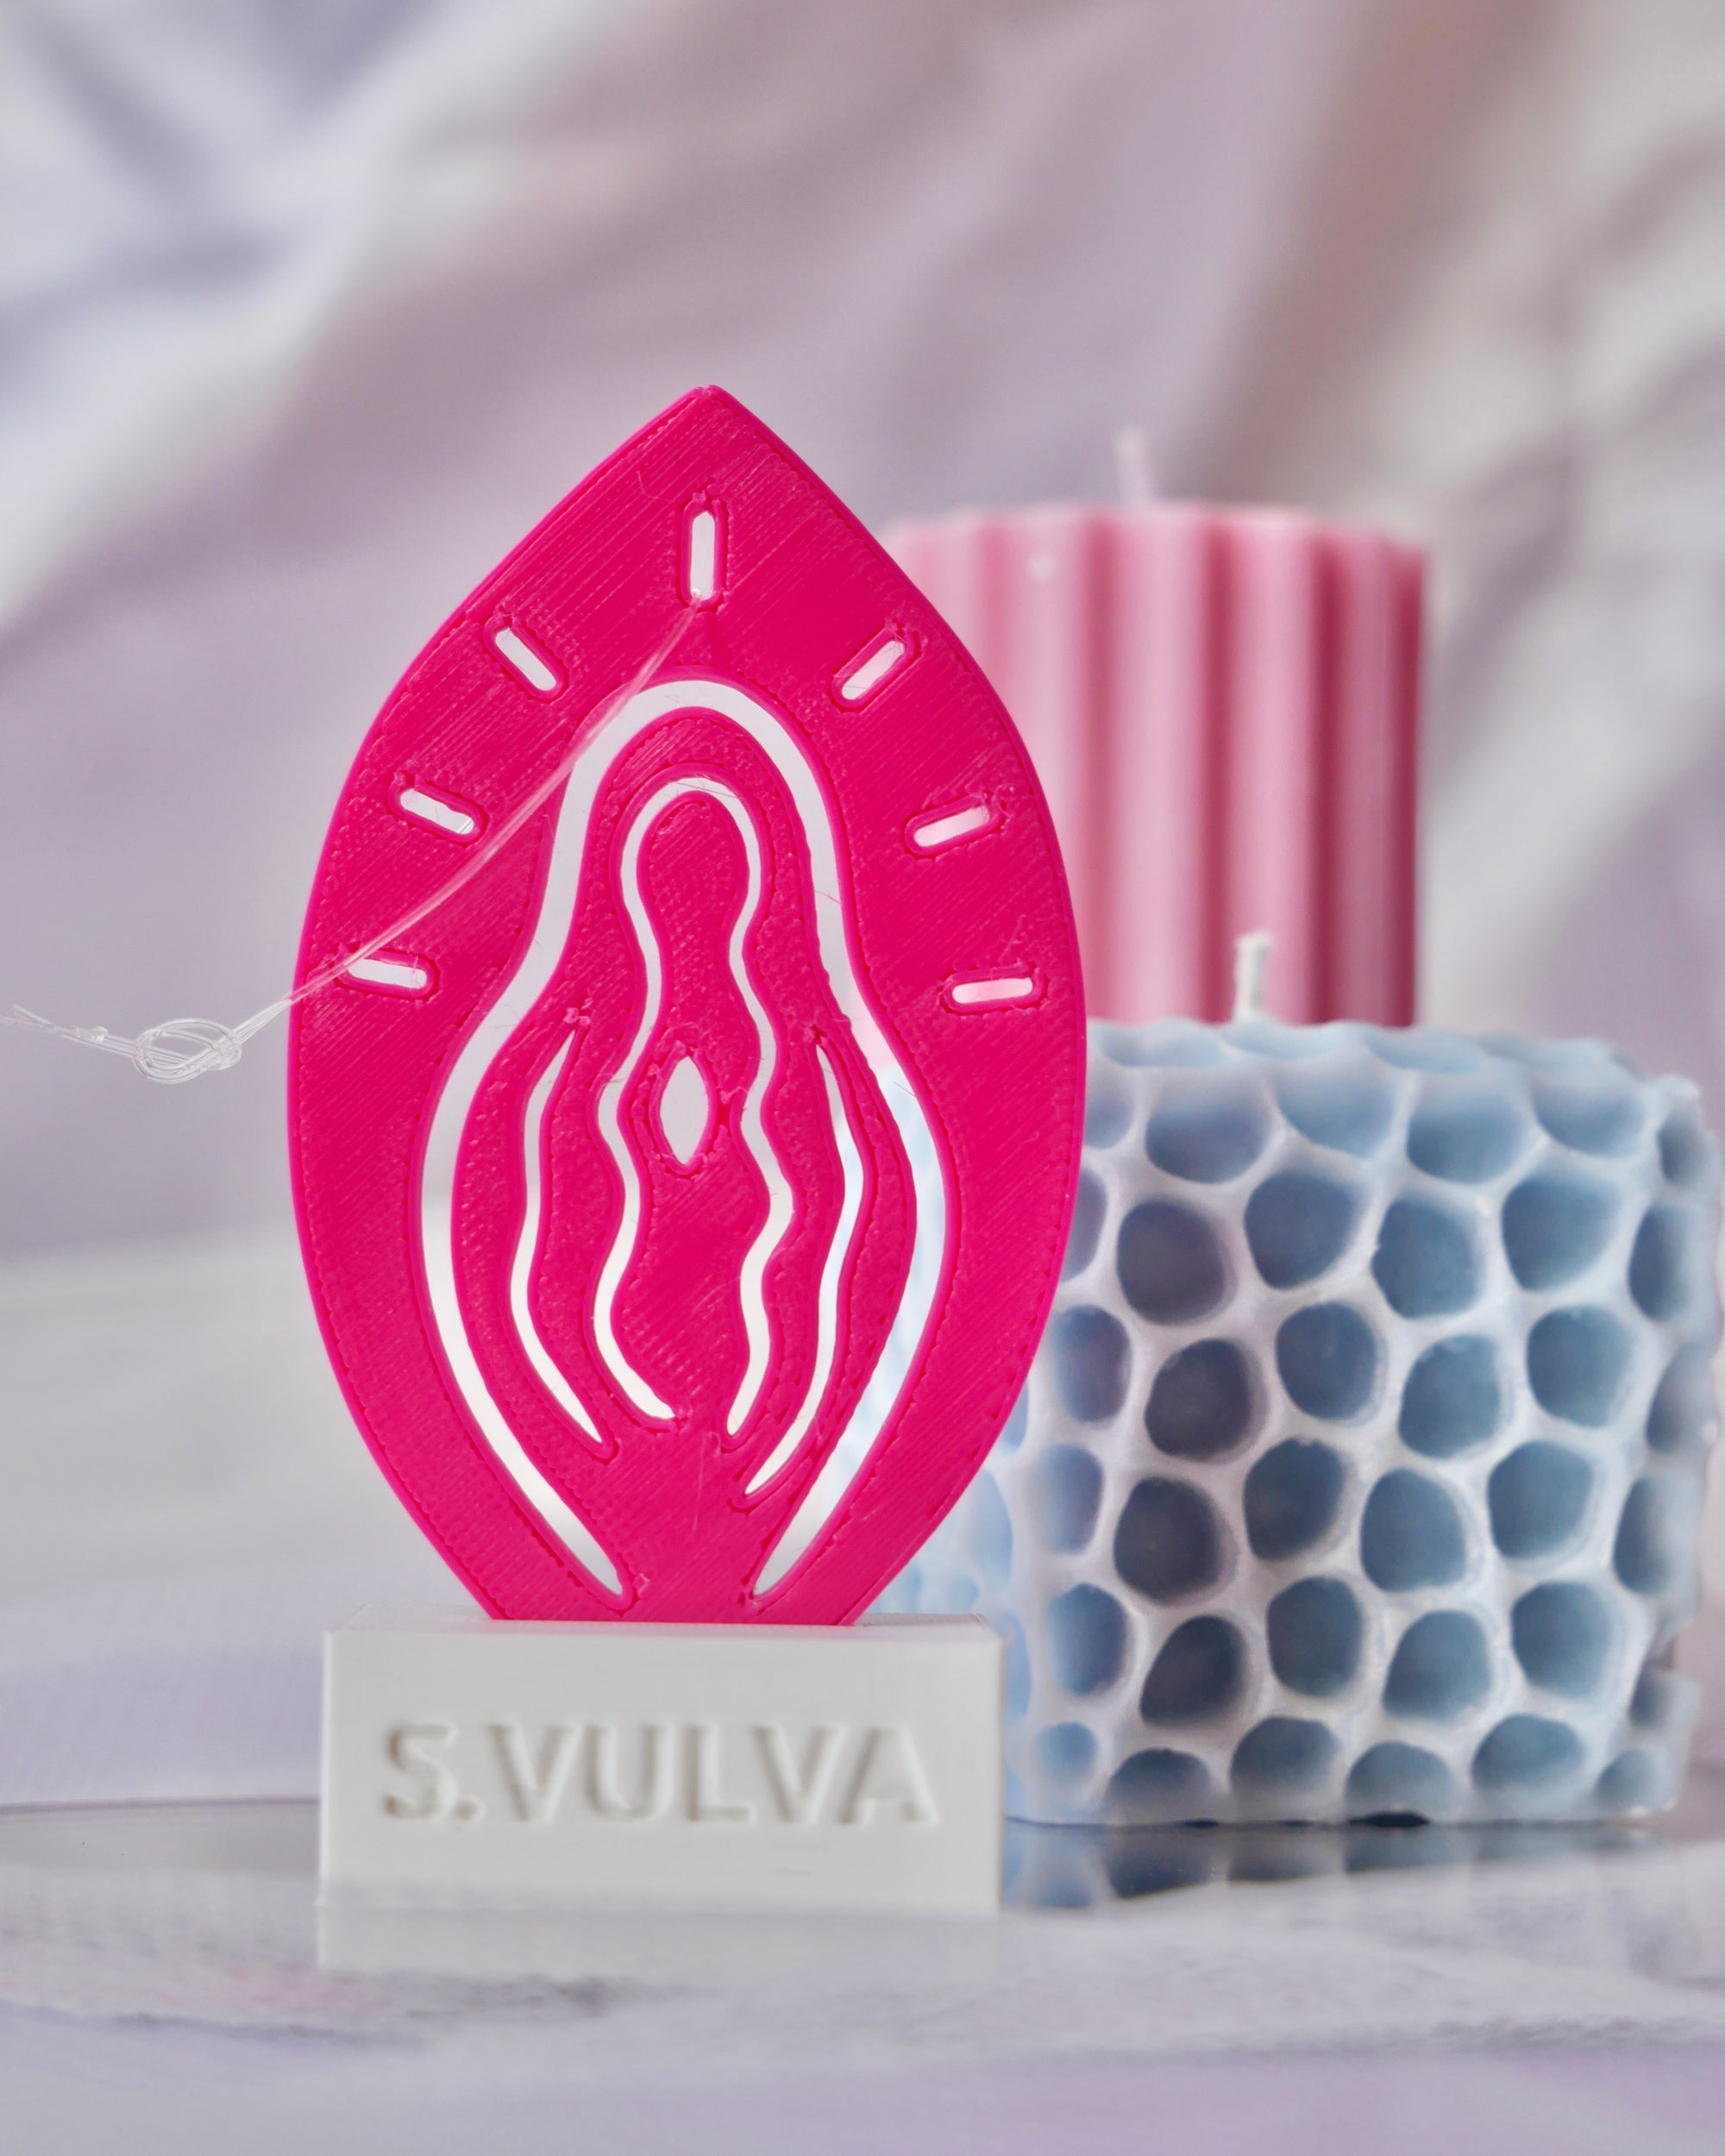 Santa Vulva Protects You From Patriarchy